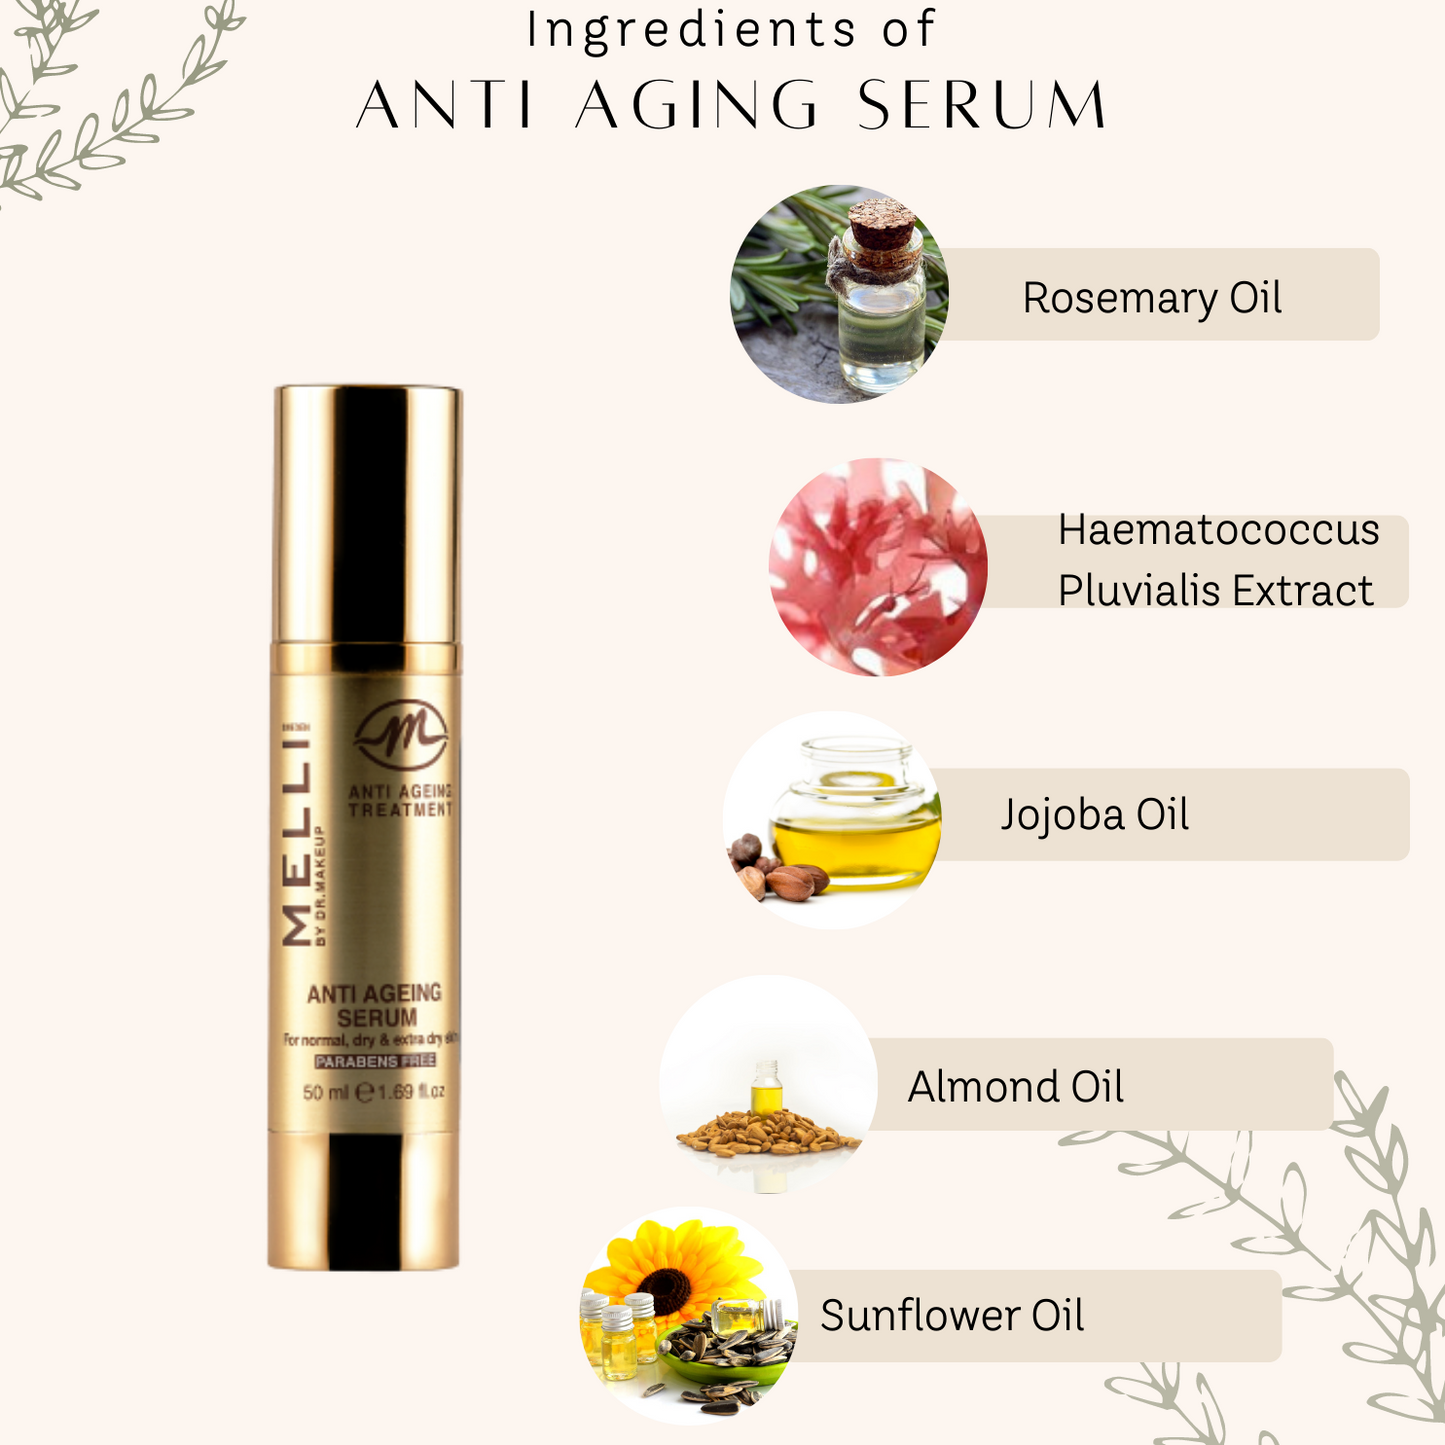 Anti Aging Serum / 50 ml